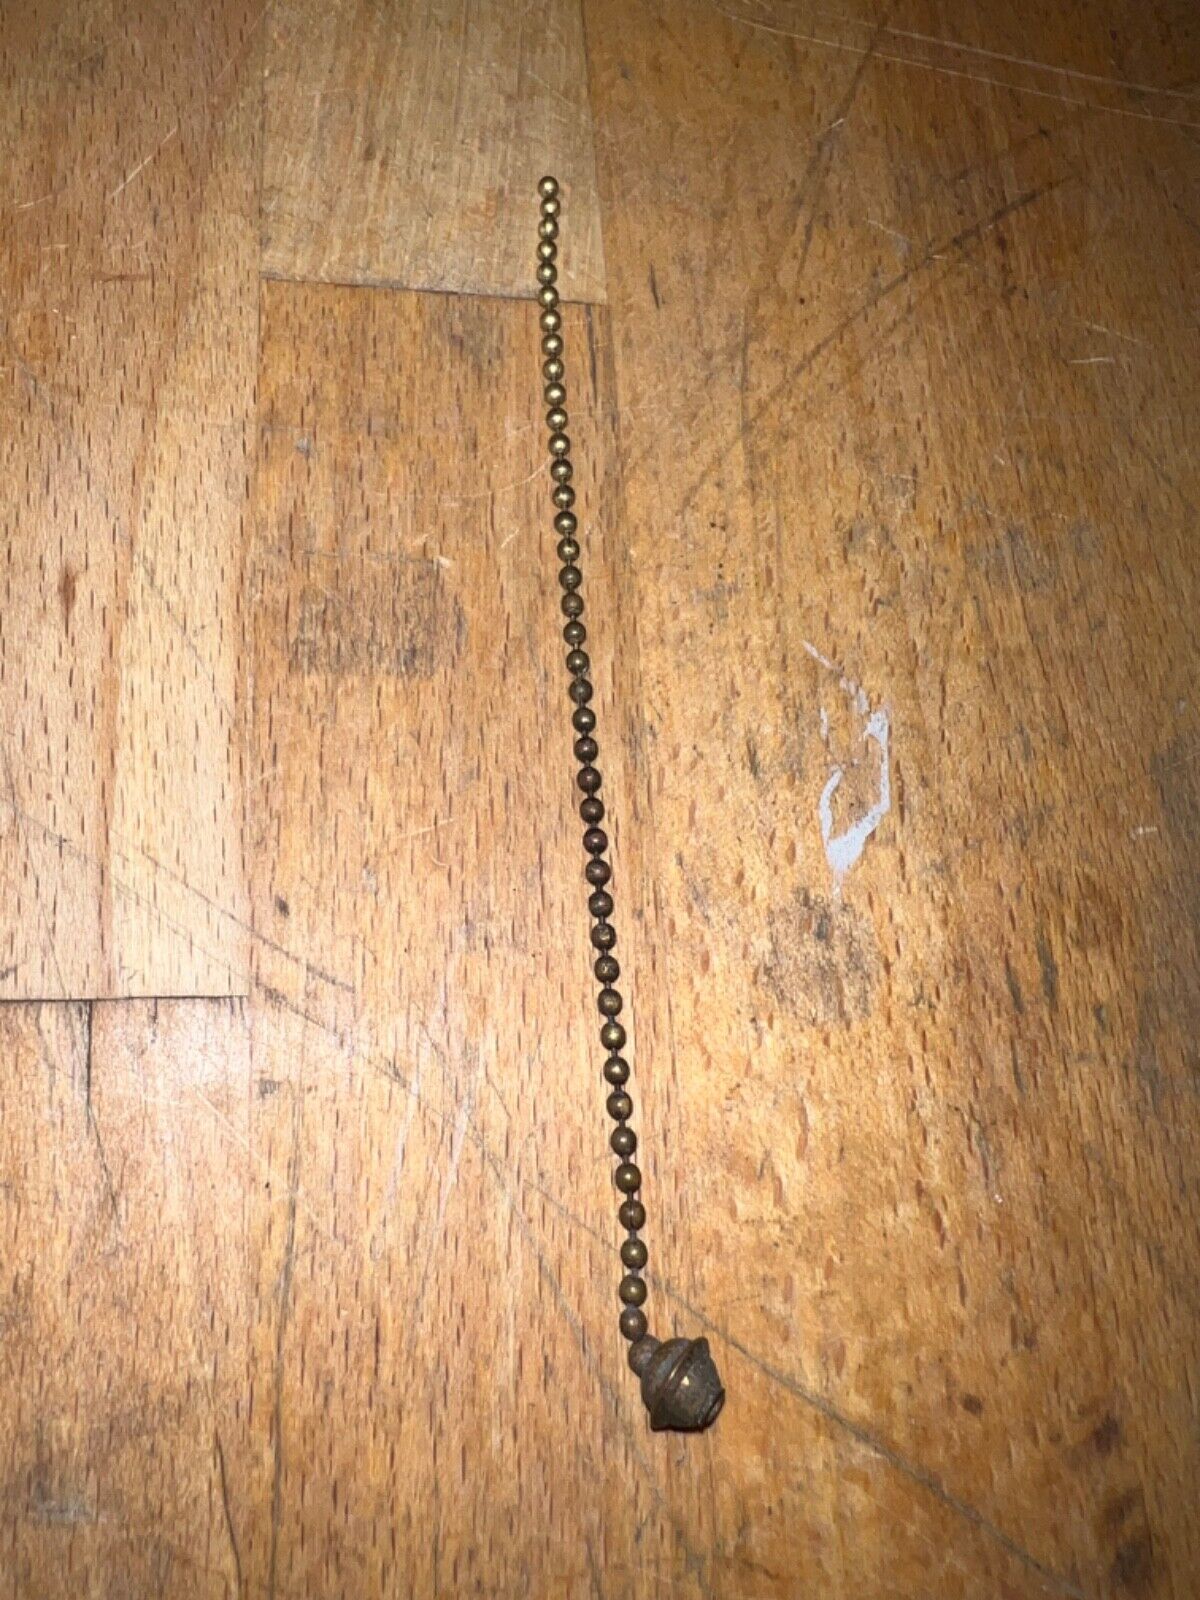 1915 Antique Bryant Candelabra 5” Snap Lock & Ball Pull Chain Tiffany Handel